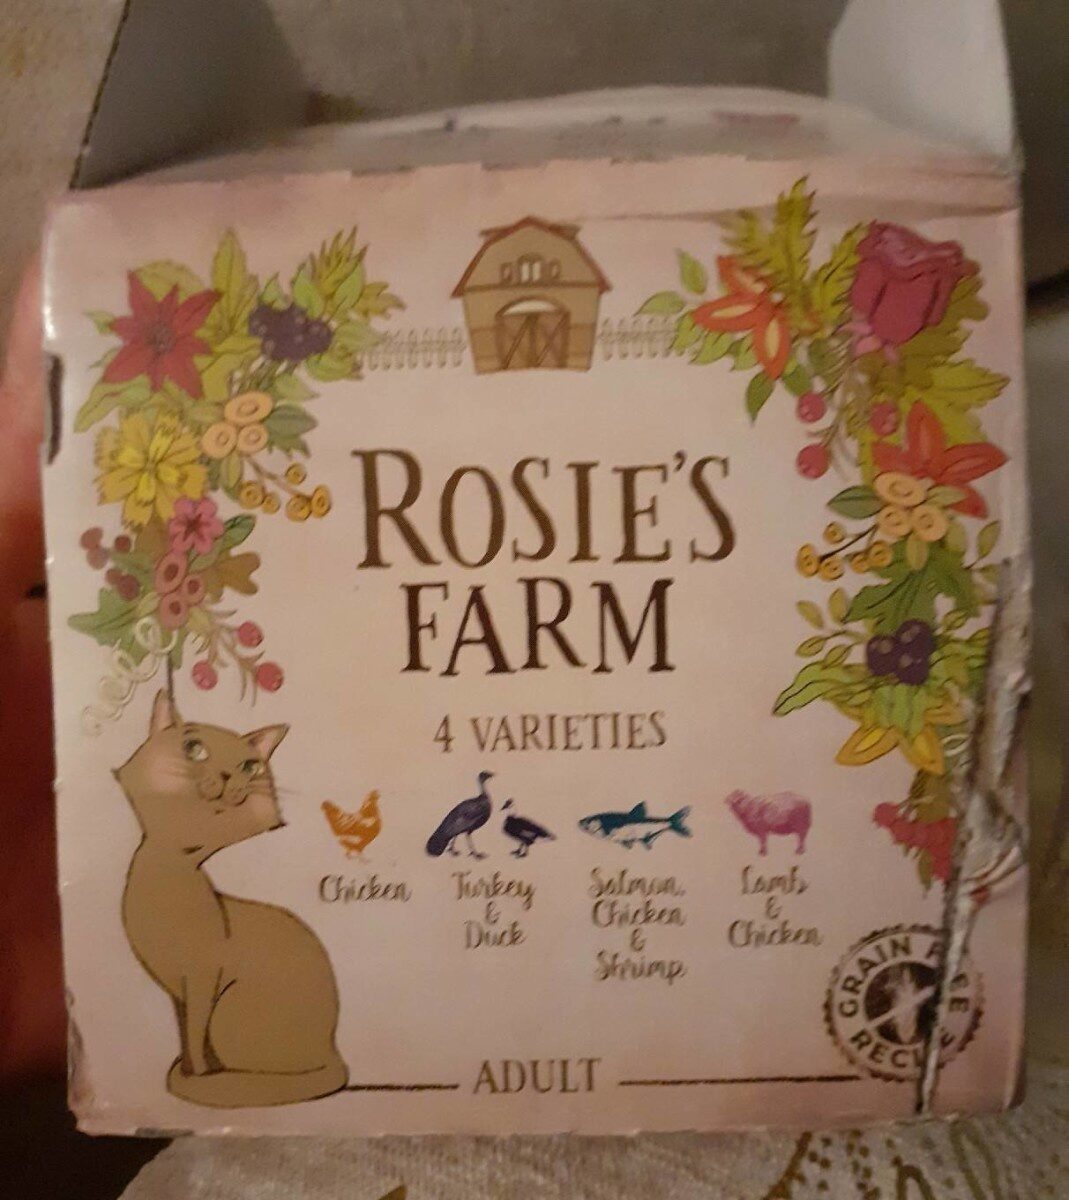 Rosies farm adult - Produit - fr